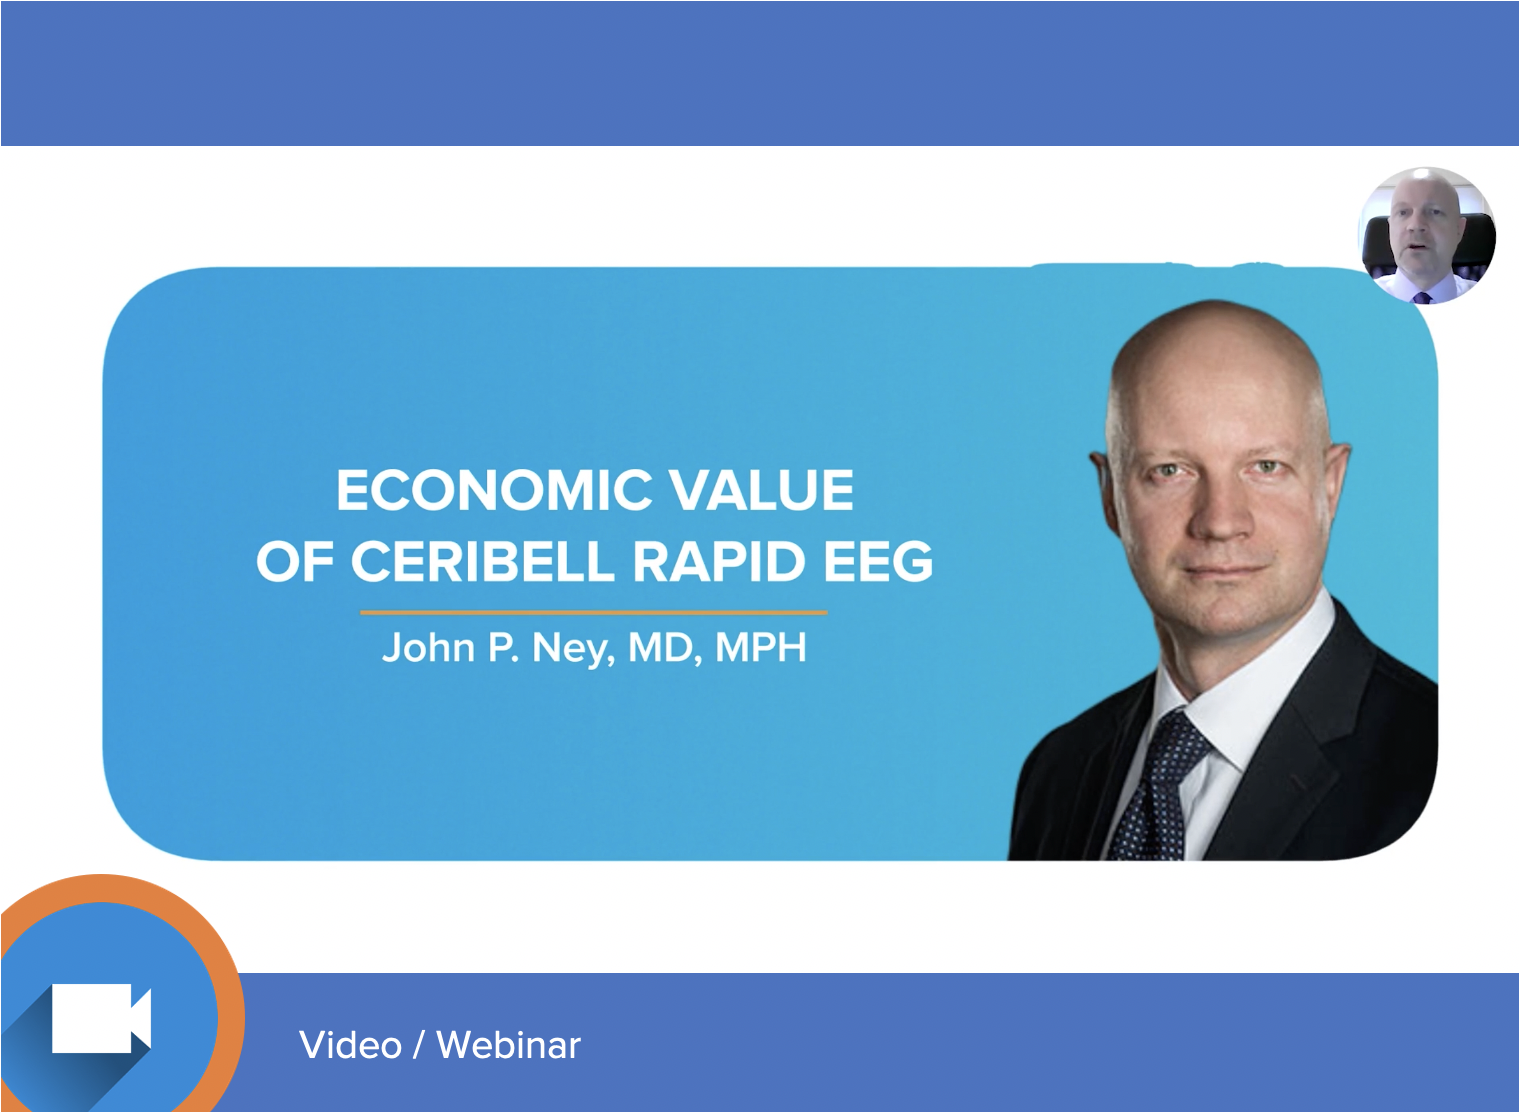 Economic Value of Ceribell Rapid EEG